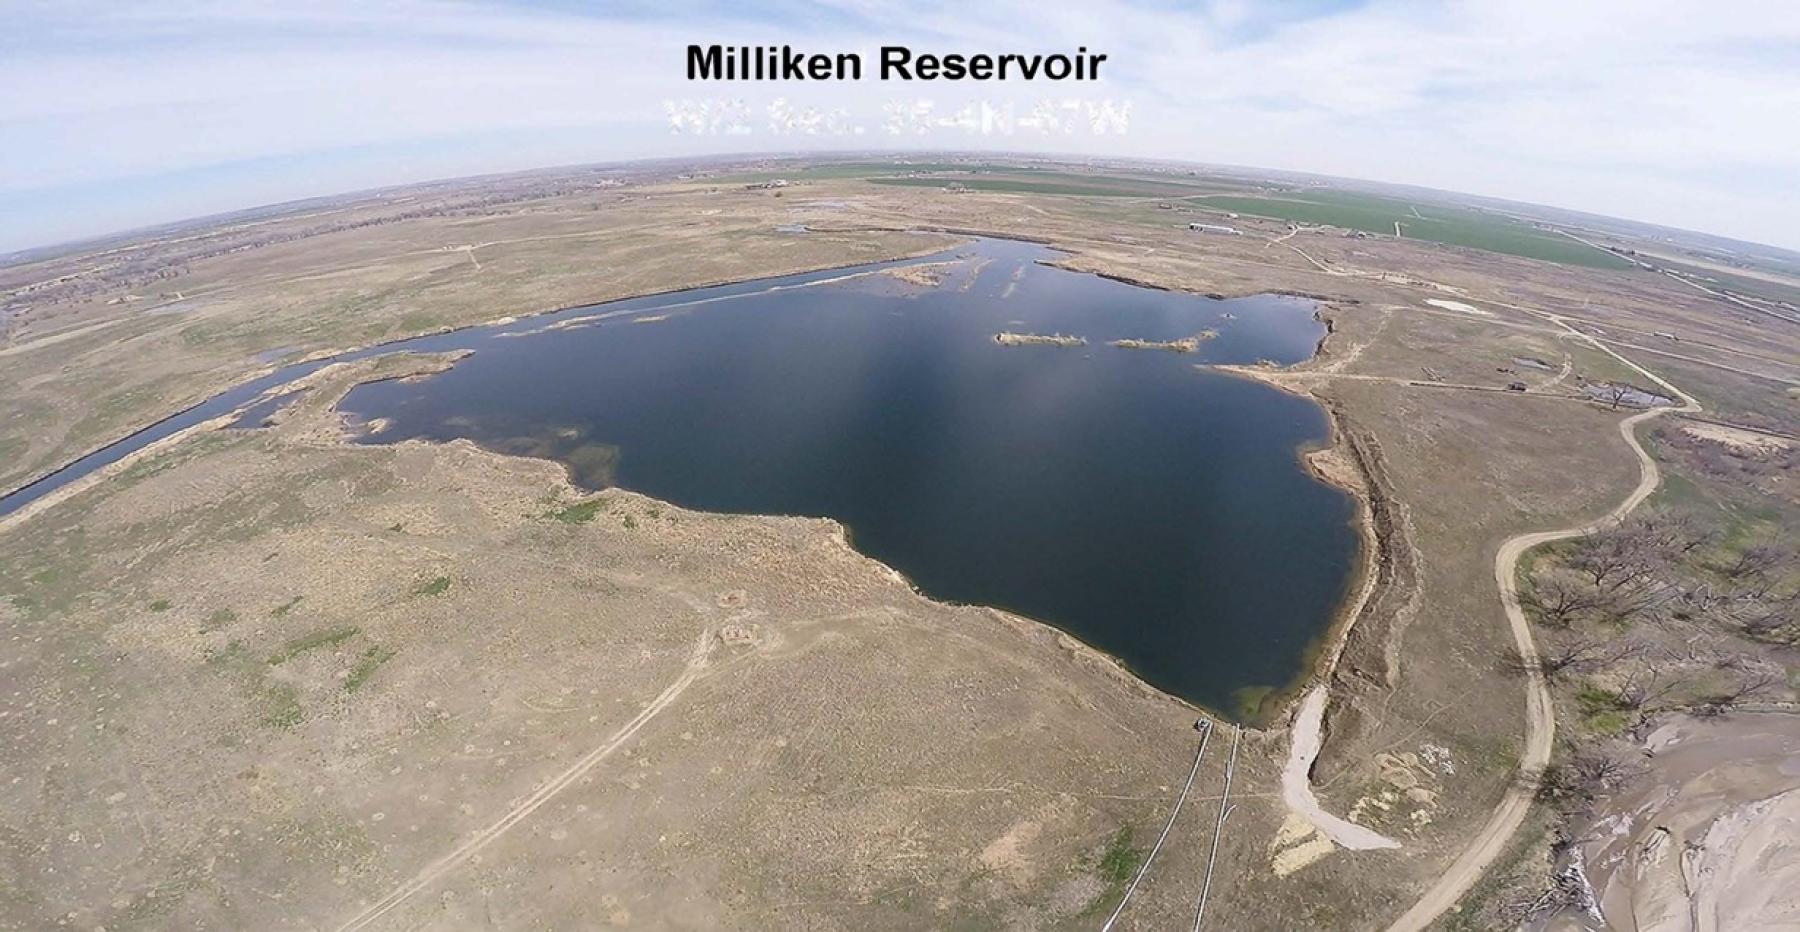 Milliken Reservoir